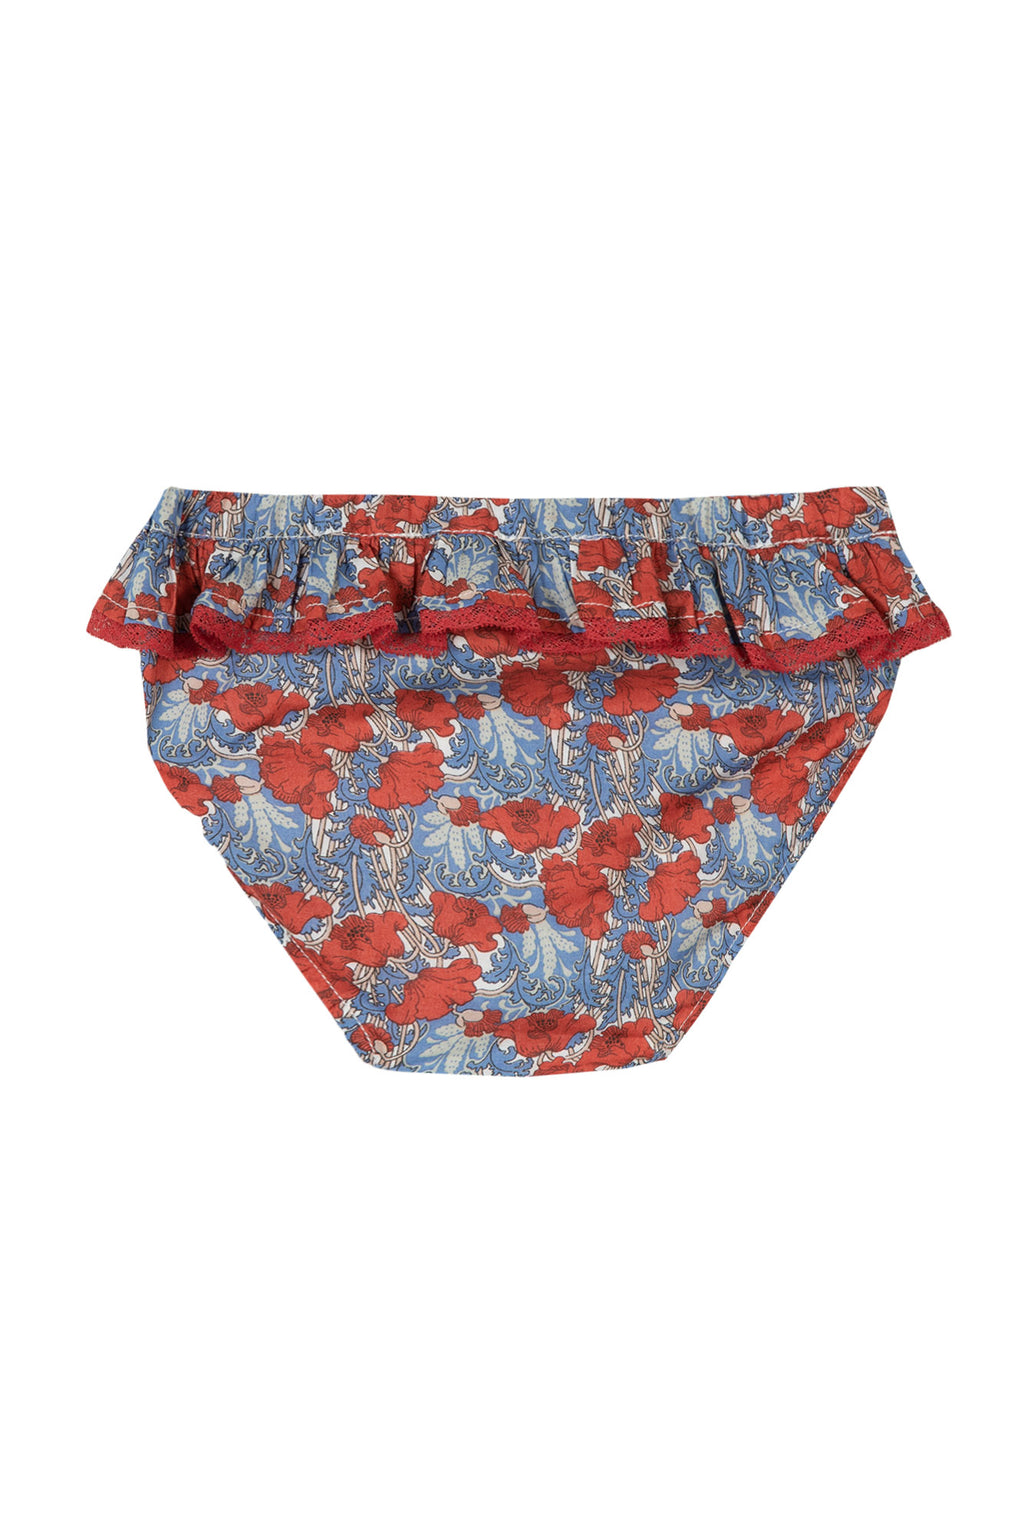 Bath panties - Fabric Liberty poppy